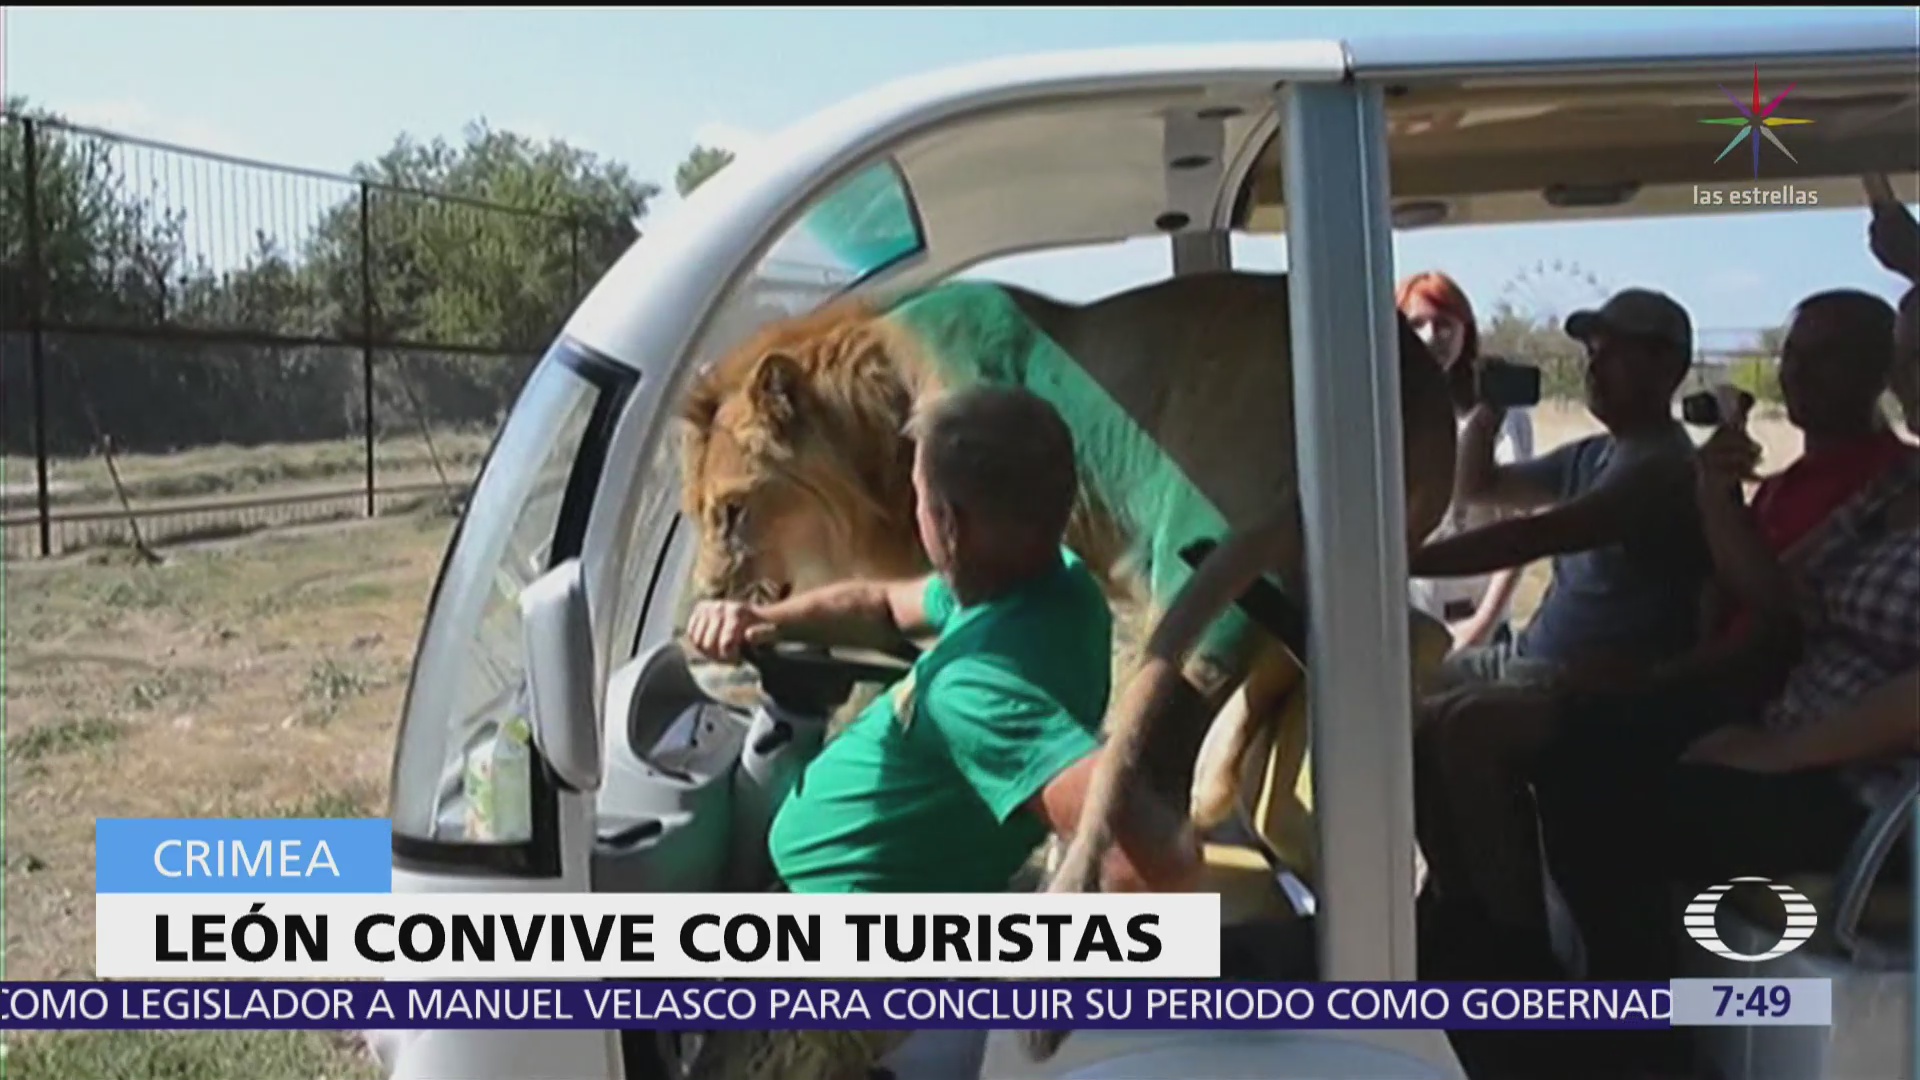 León aborda coche con turistas en parque safari de Crimea